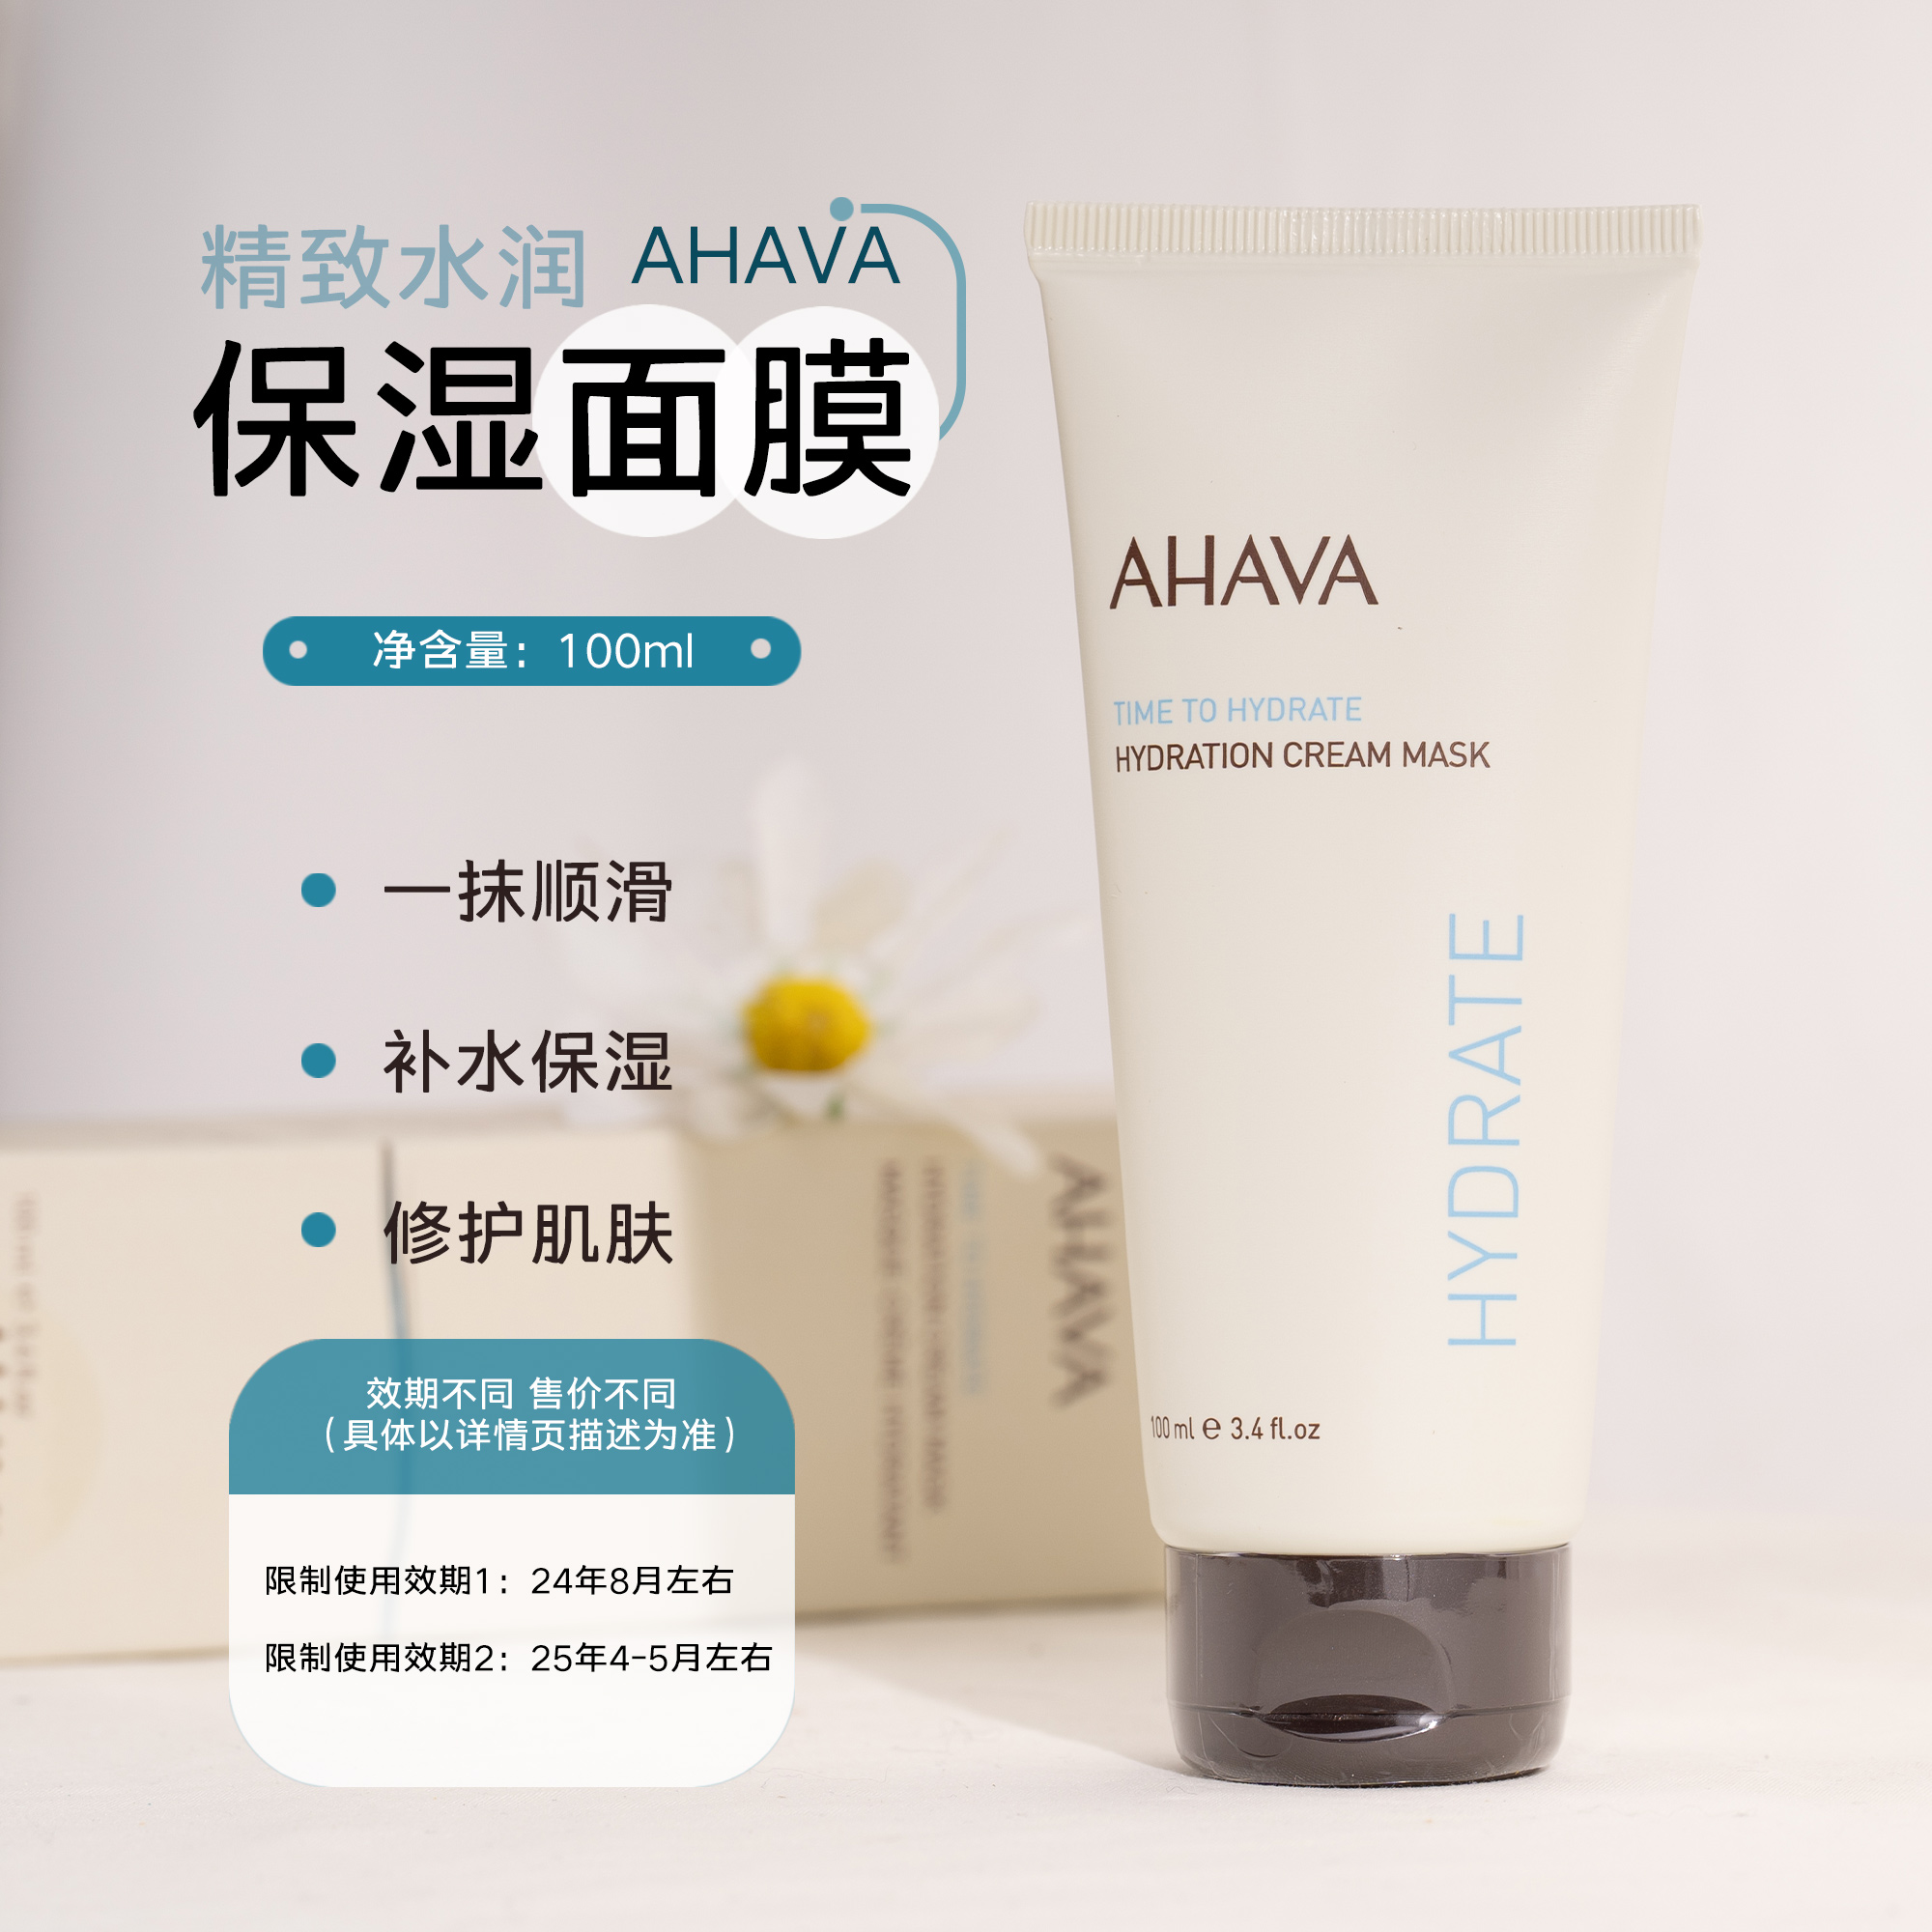 AHAVA精致保湿水润面膜100ml 涂抹面膜补水保湿修护面部 美容护肤/美体/精油 涂抹面膜 原图主图